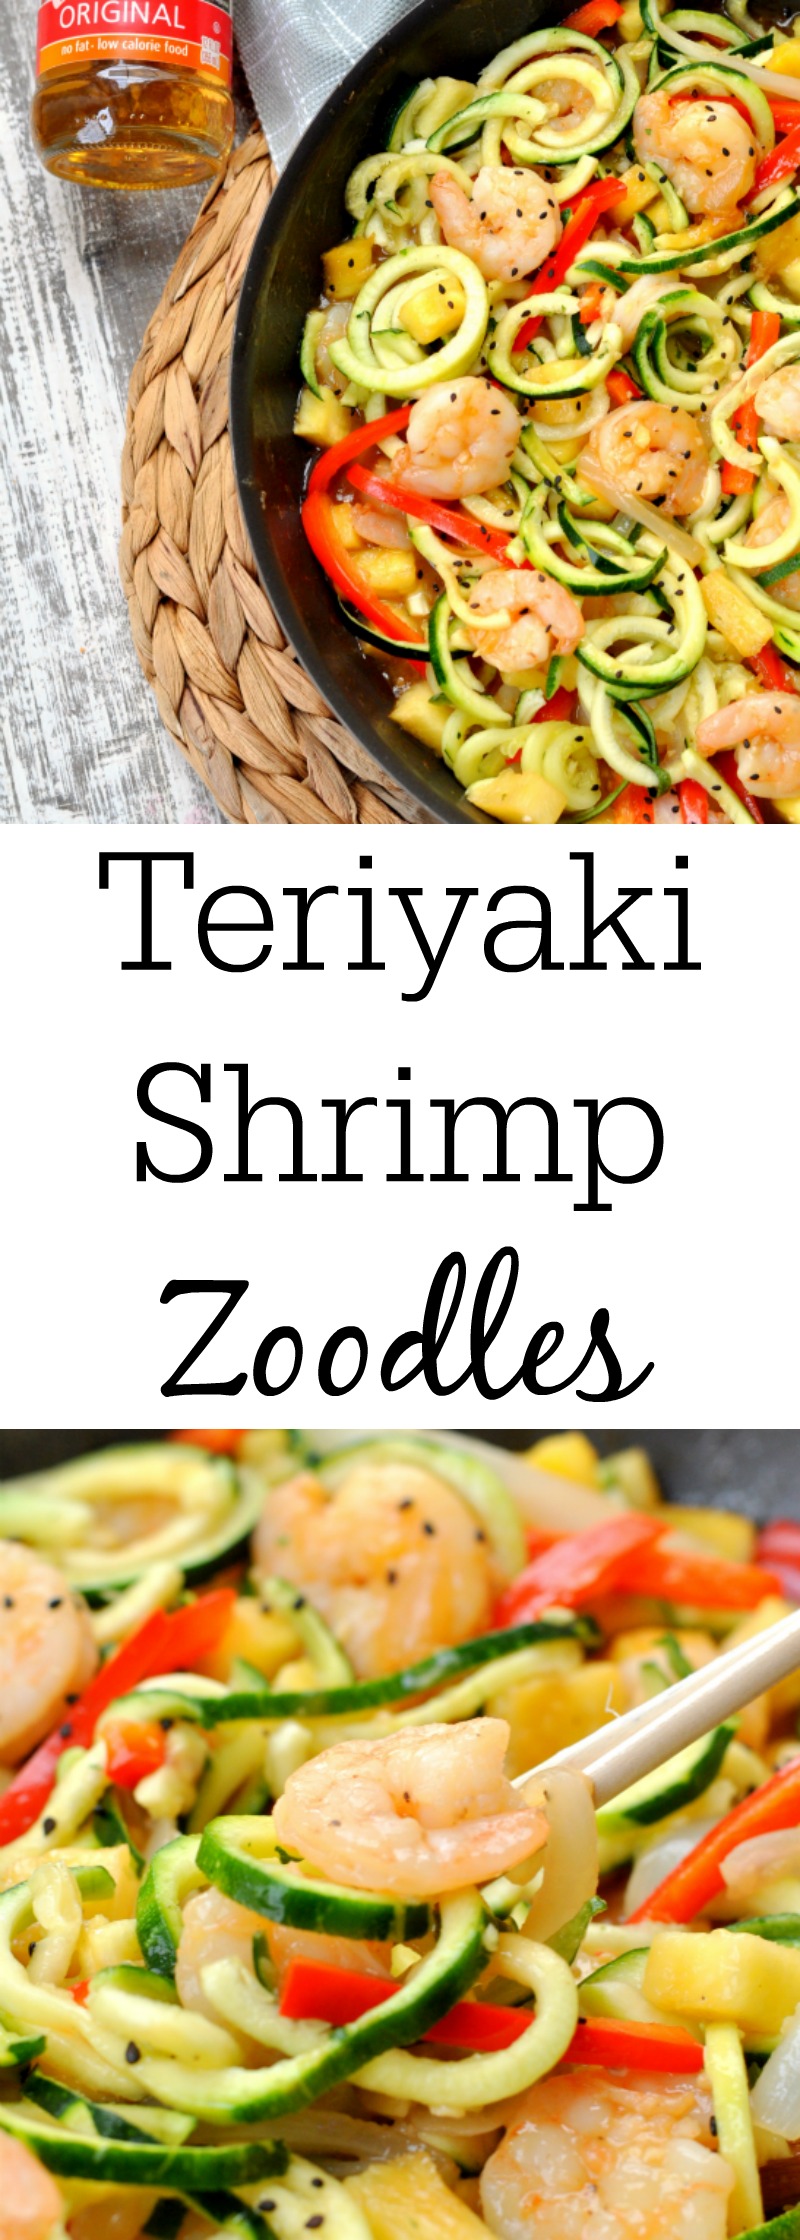 Teriyaki Shrimp Vegetable Noodles Photo Collage